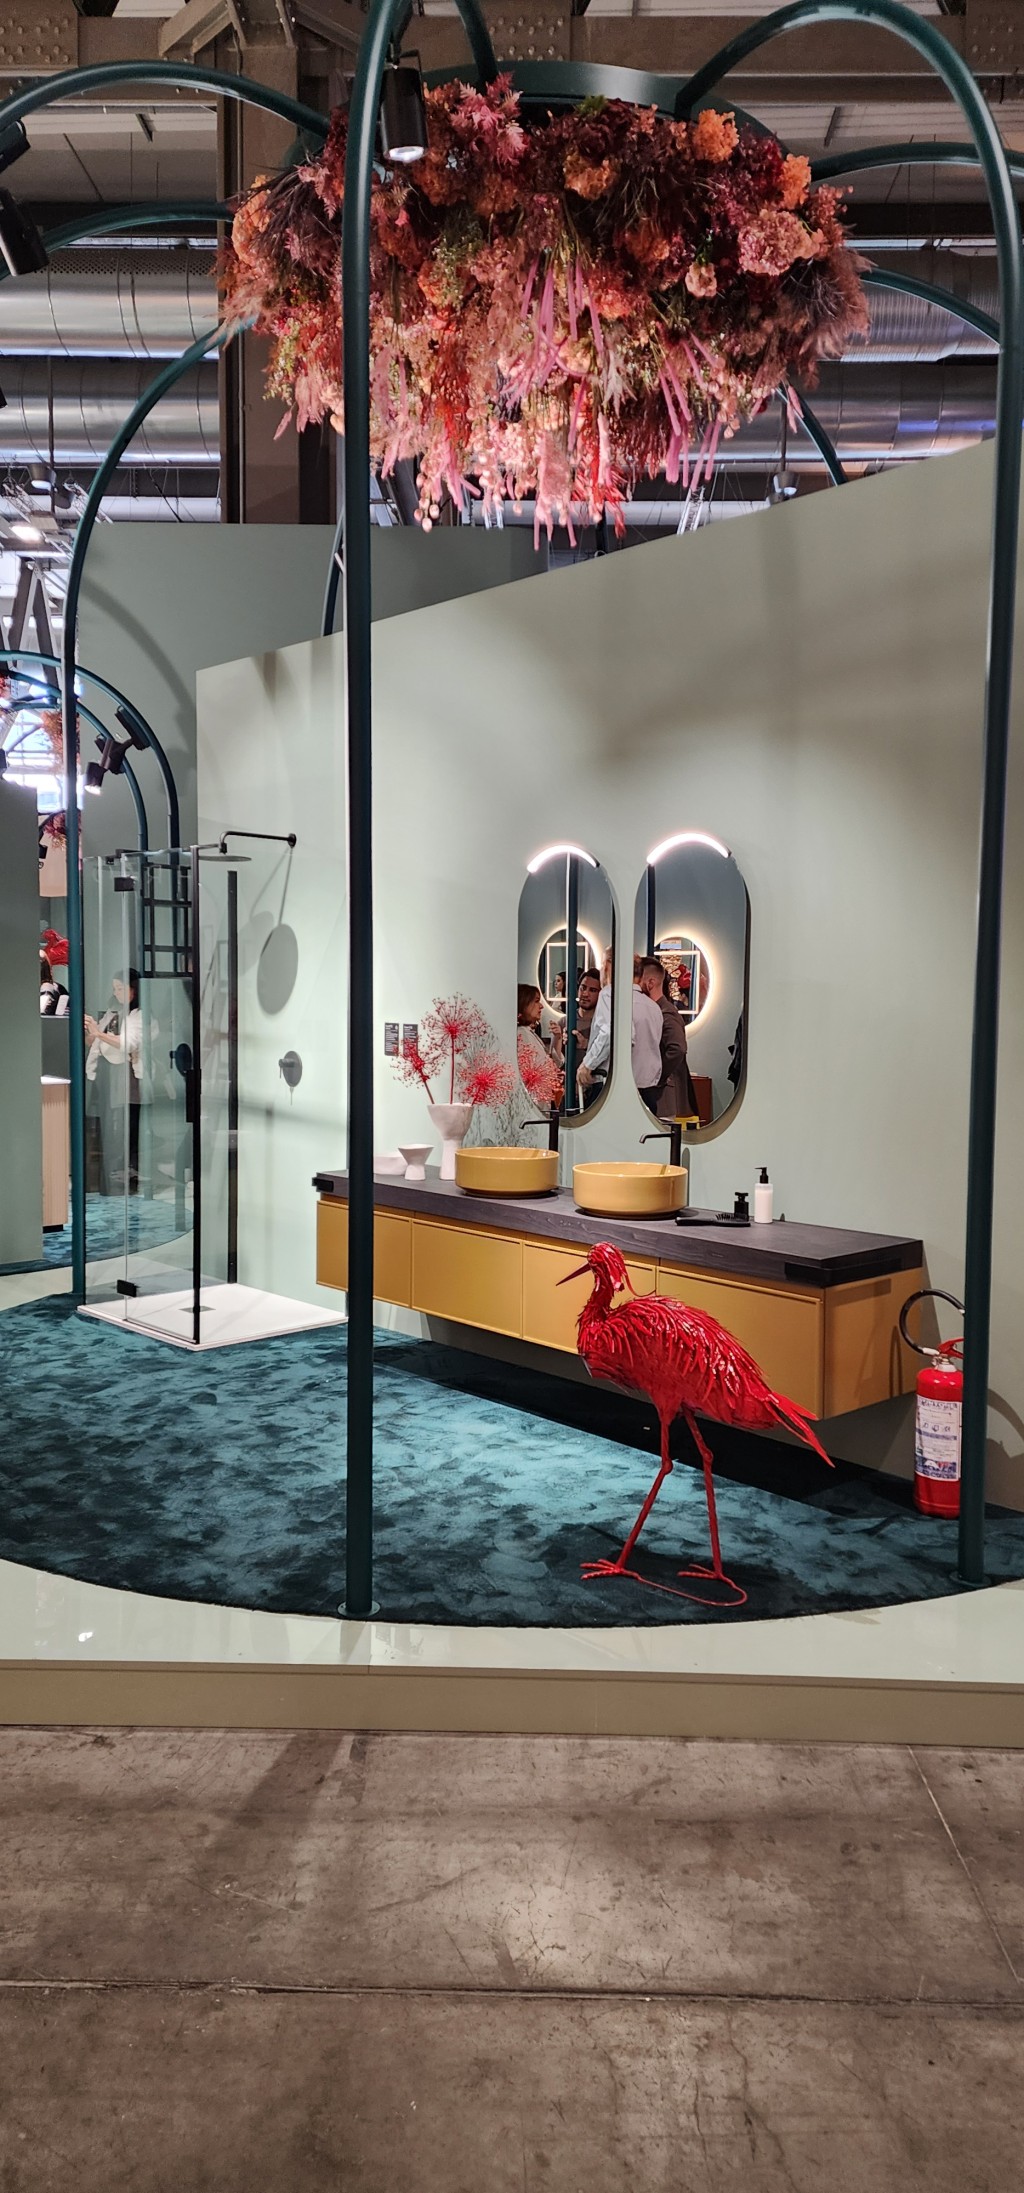 Vanity display with a flamingo at Salone Internazionale del Mobile di Milano